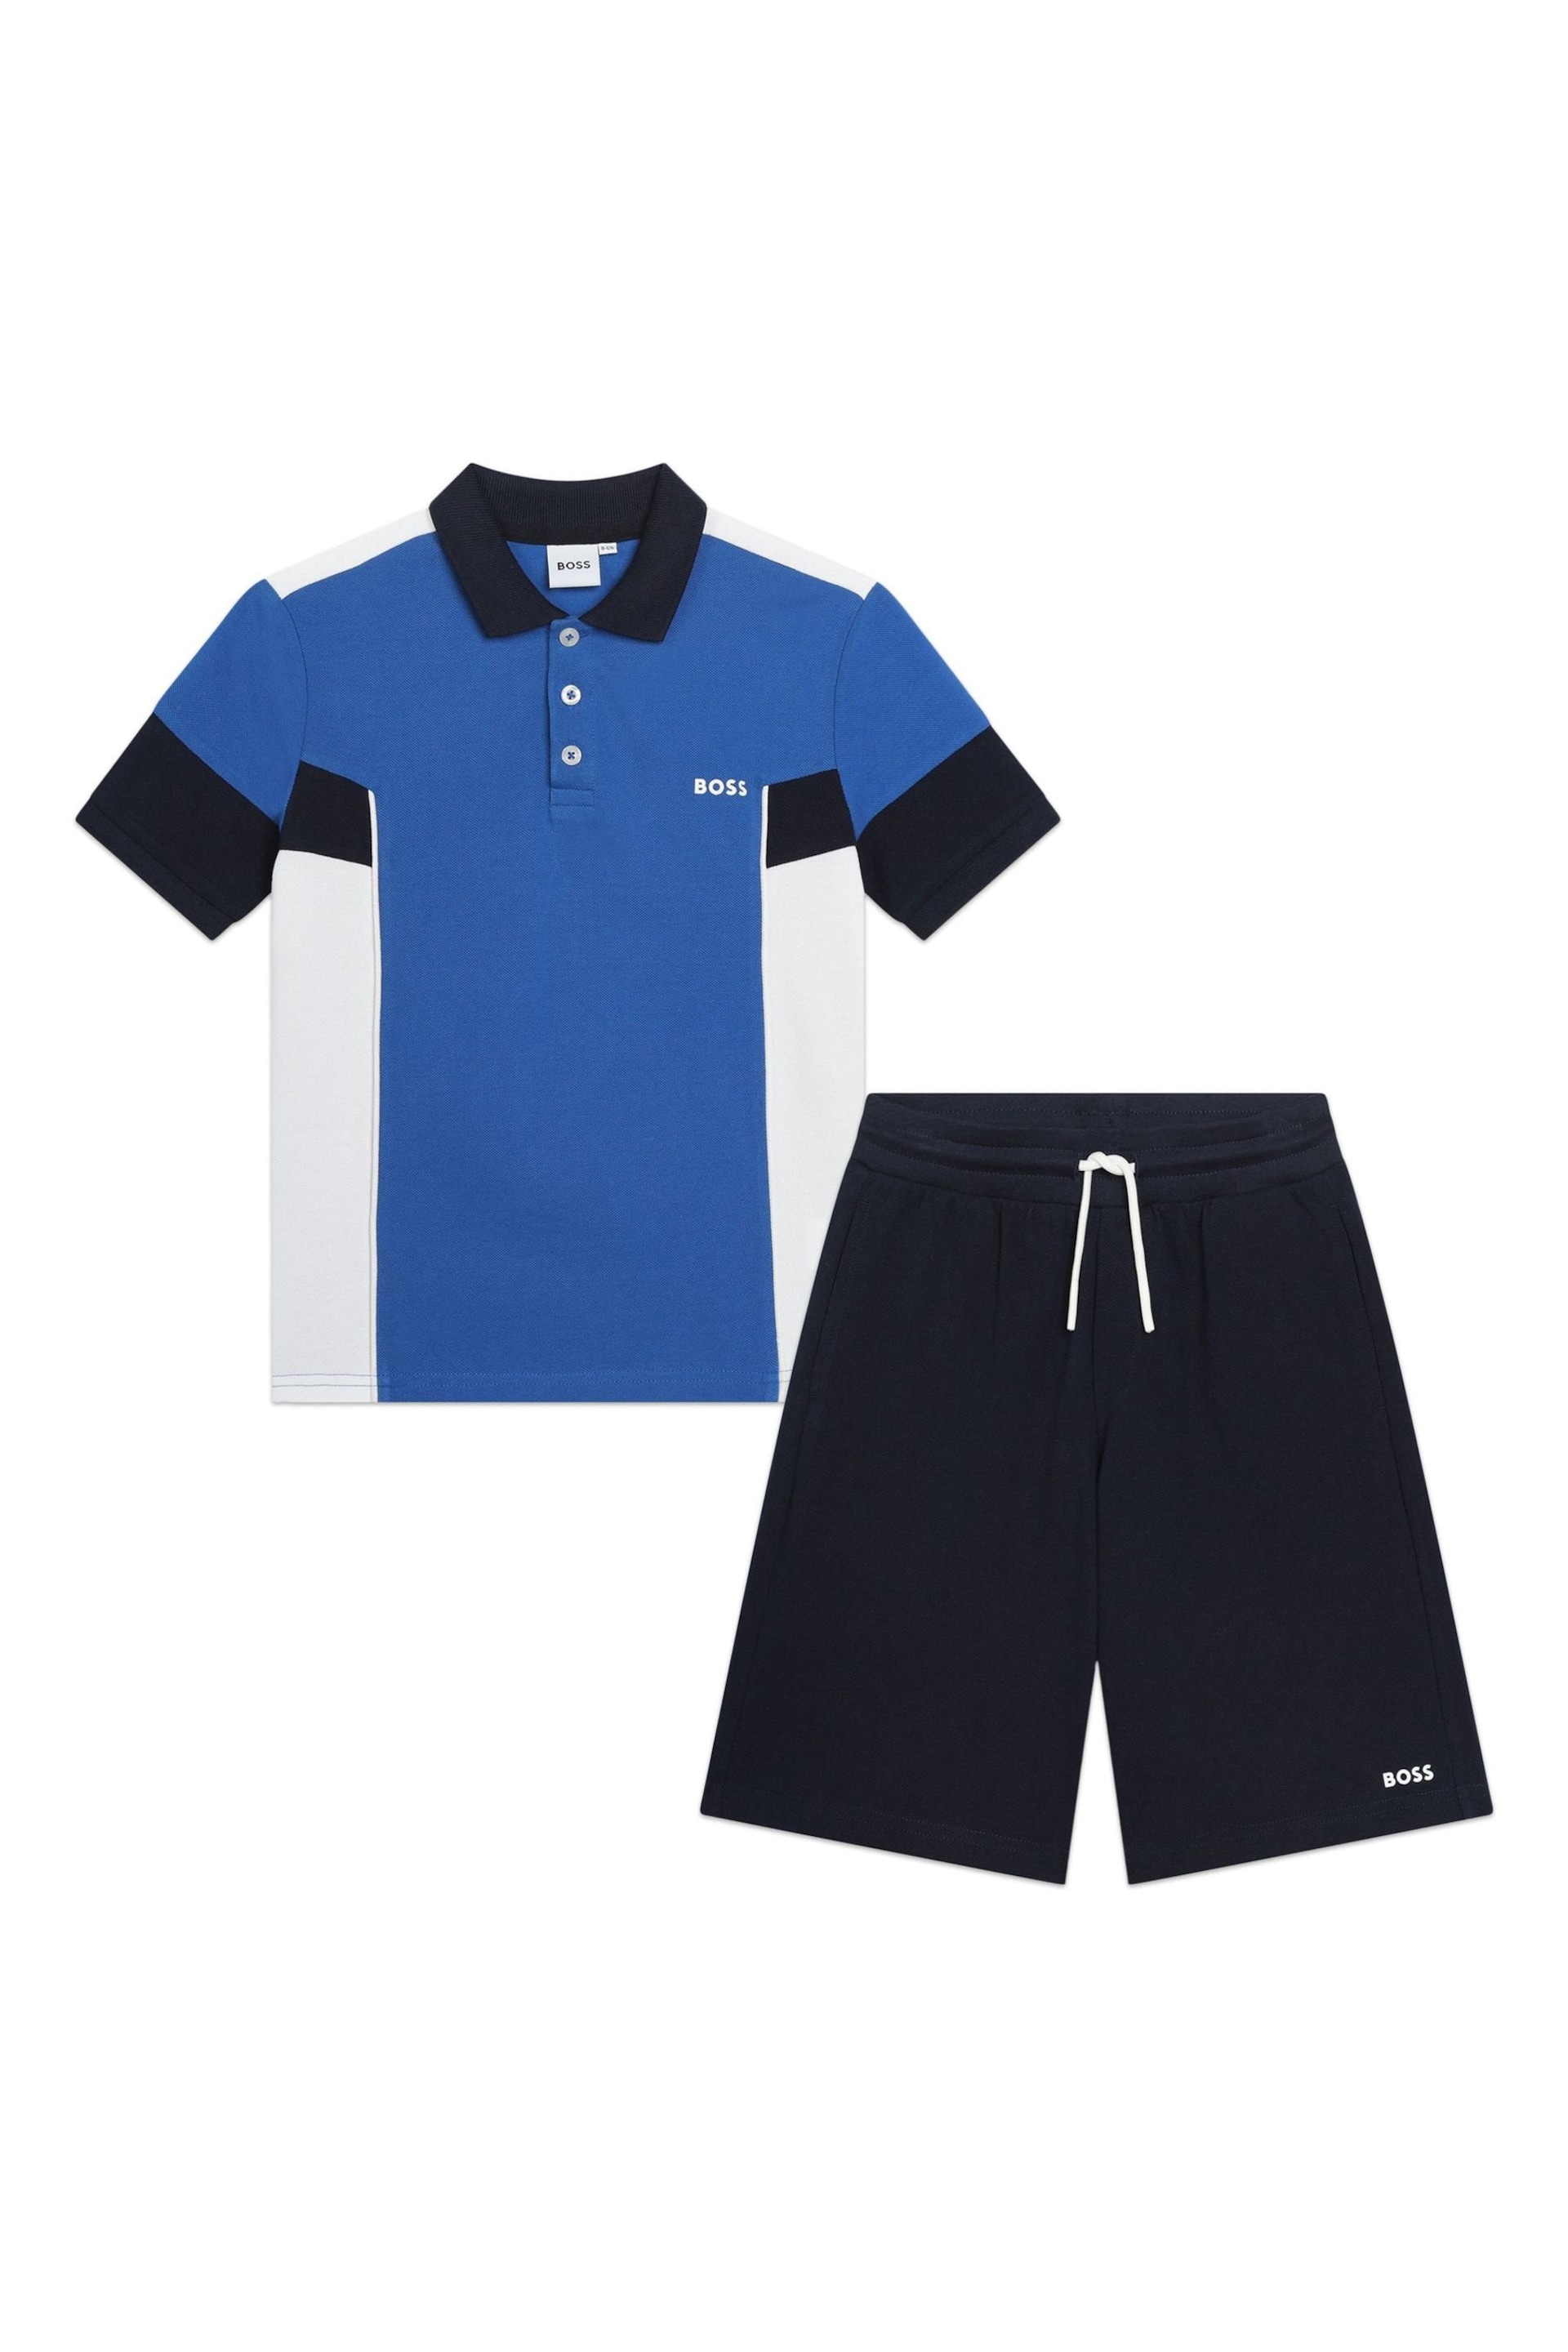 BOSS Blue Colourblock Polo And Shorts Set - Image 1 of 7